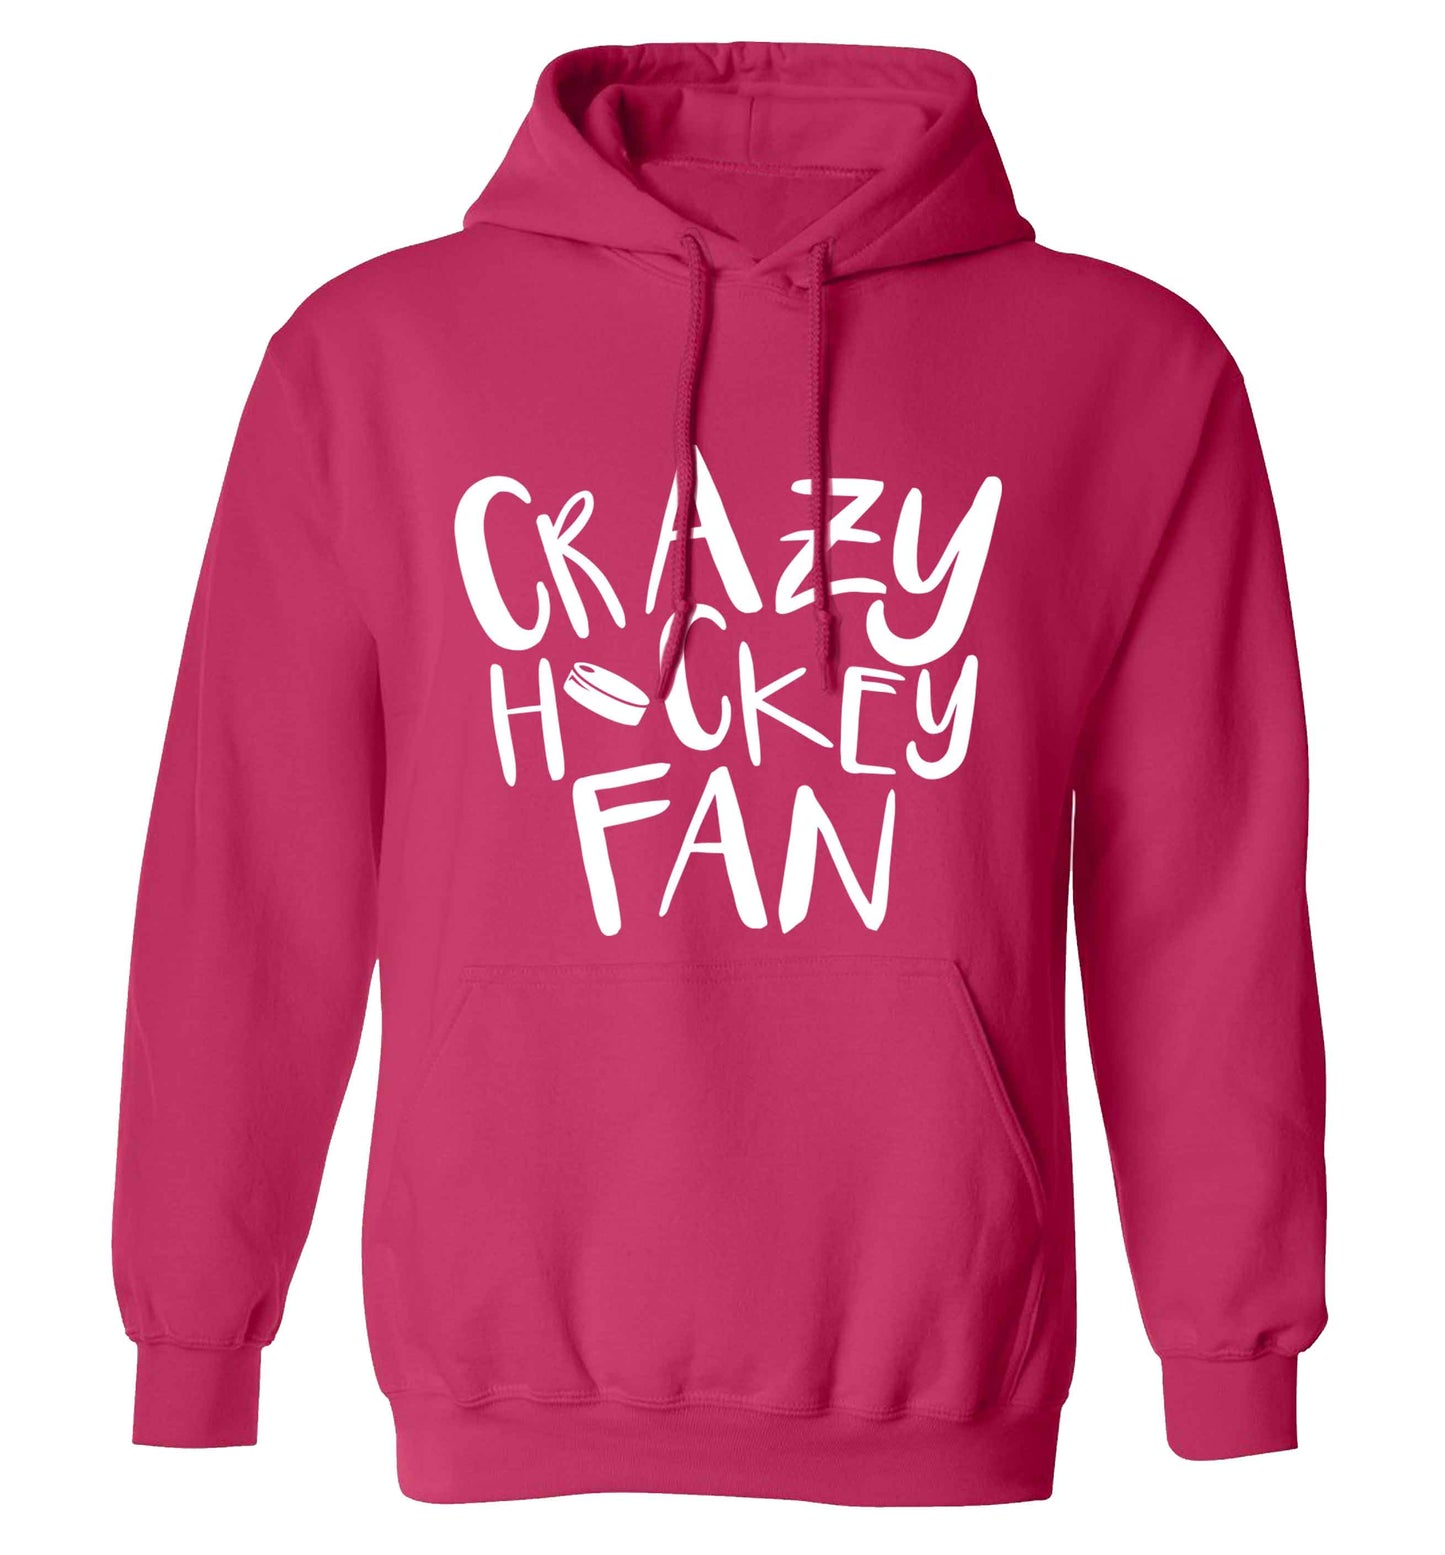 Crazy hockey fan adults unisex pink hoodie 2XL